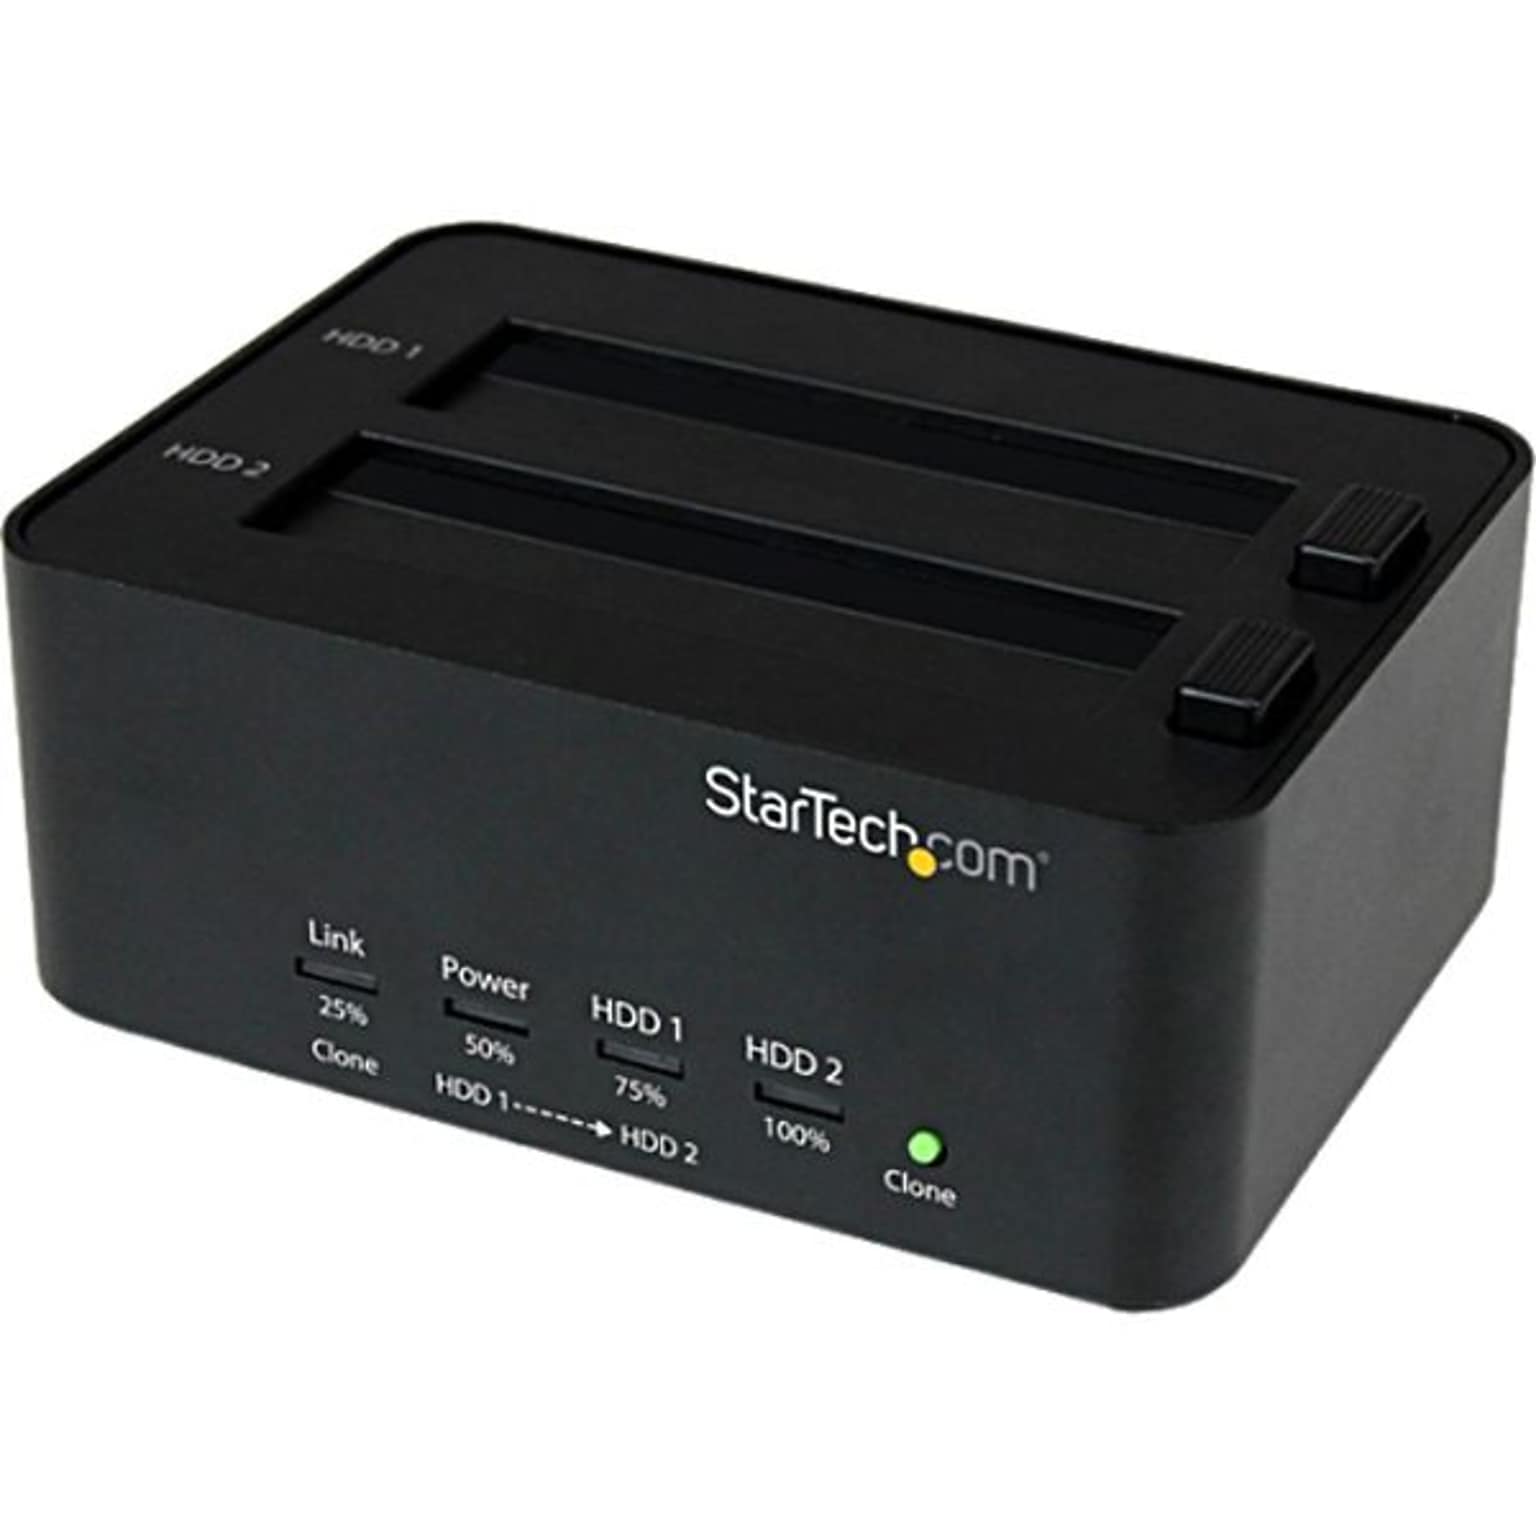 Startech USB 3.0 to 2.5/3.5 SATA Hard Drive Docking Station and Standalone HDD/SSD Duplicator